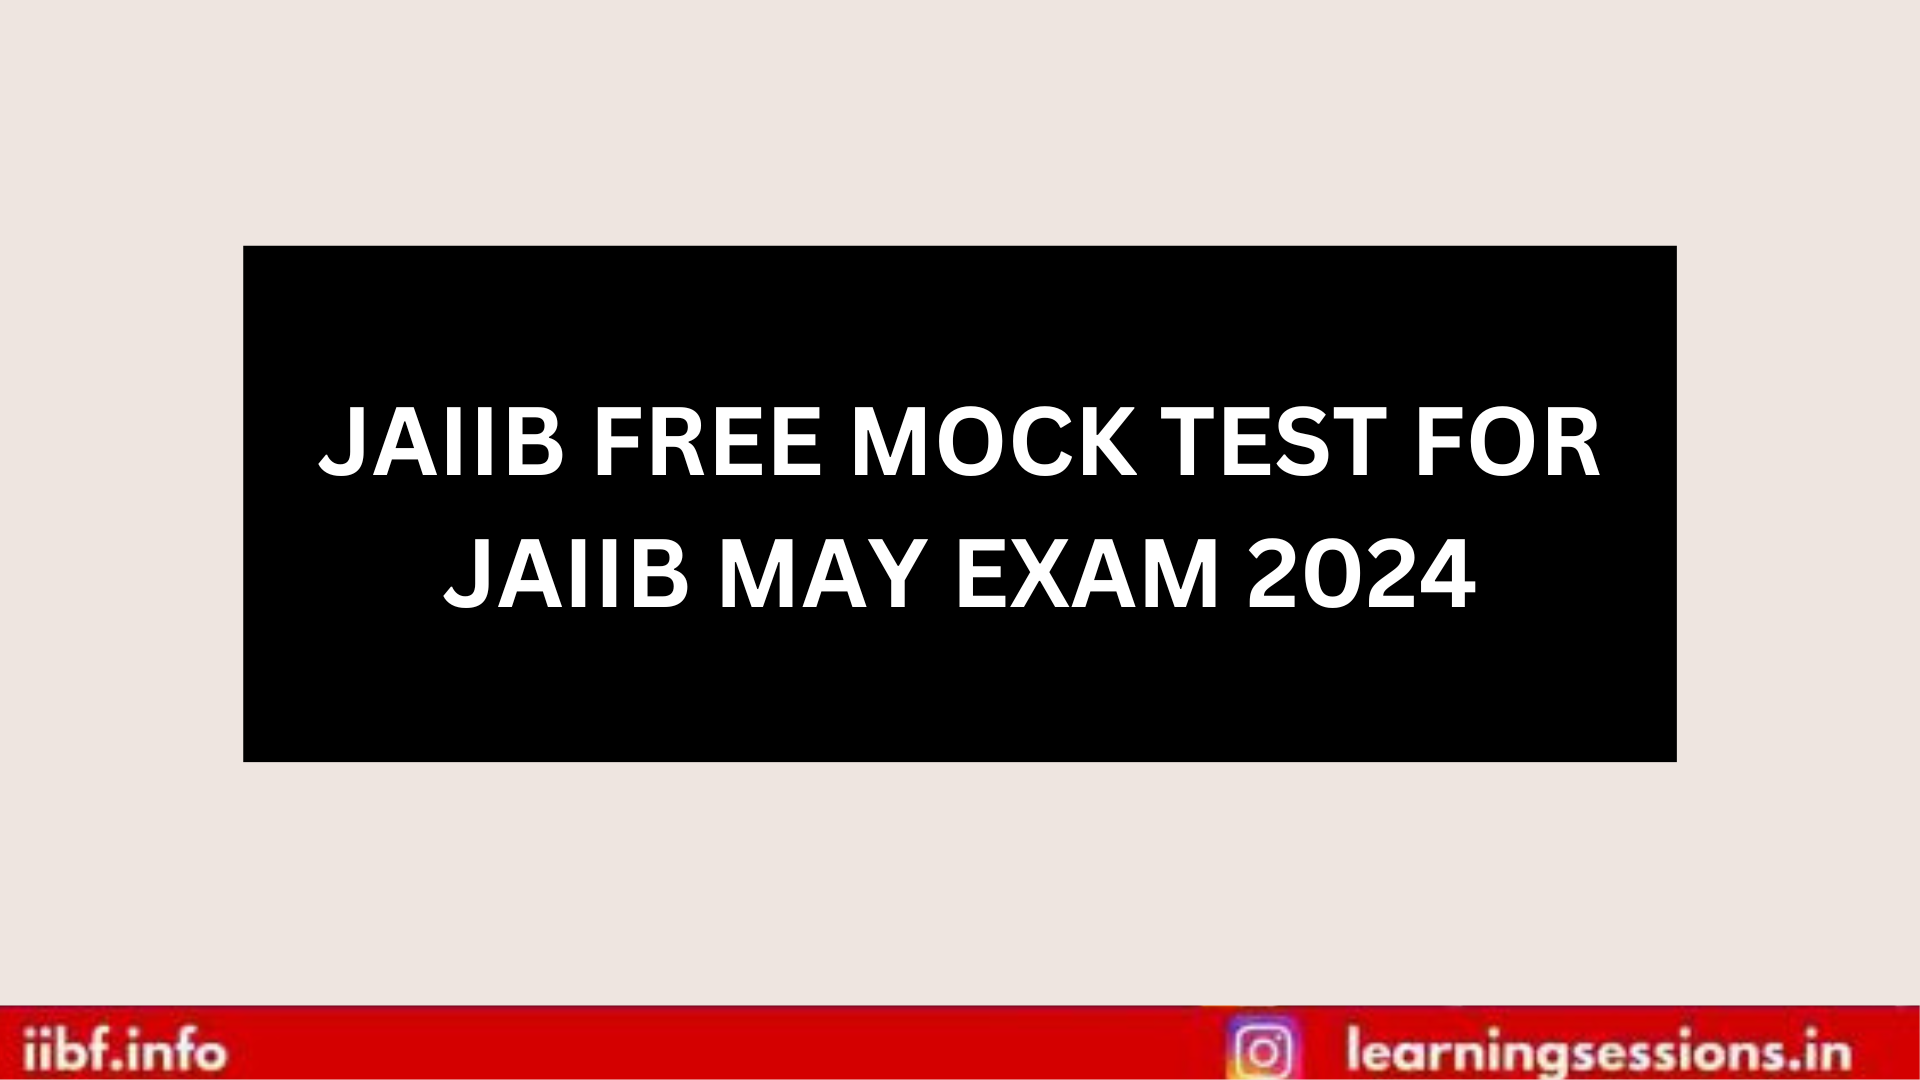 JAIIB FREE MOCK TEST FOR JAIIB MAY EXAM 2024